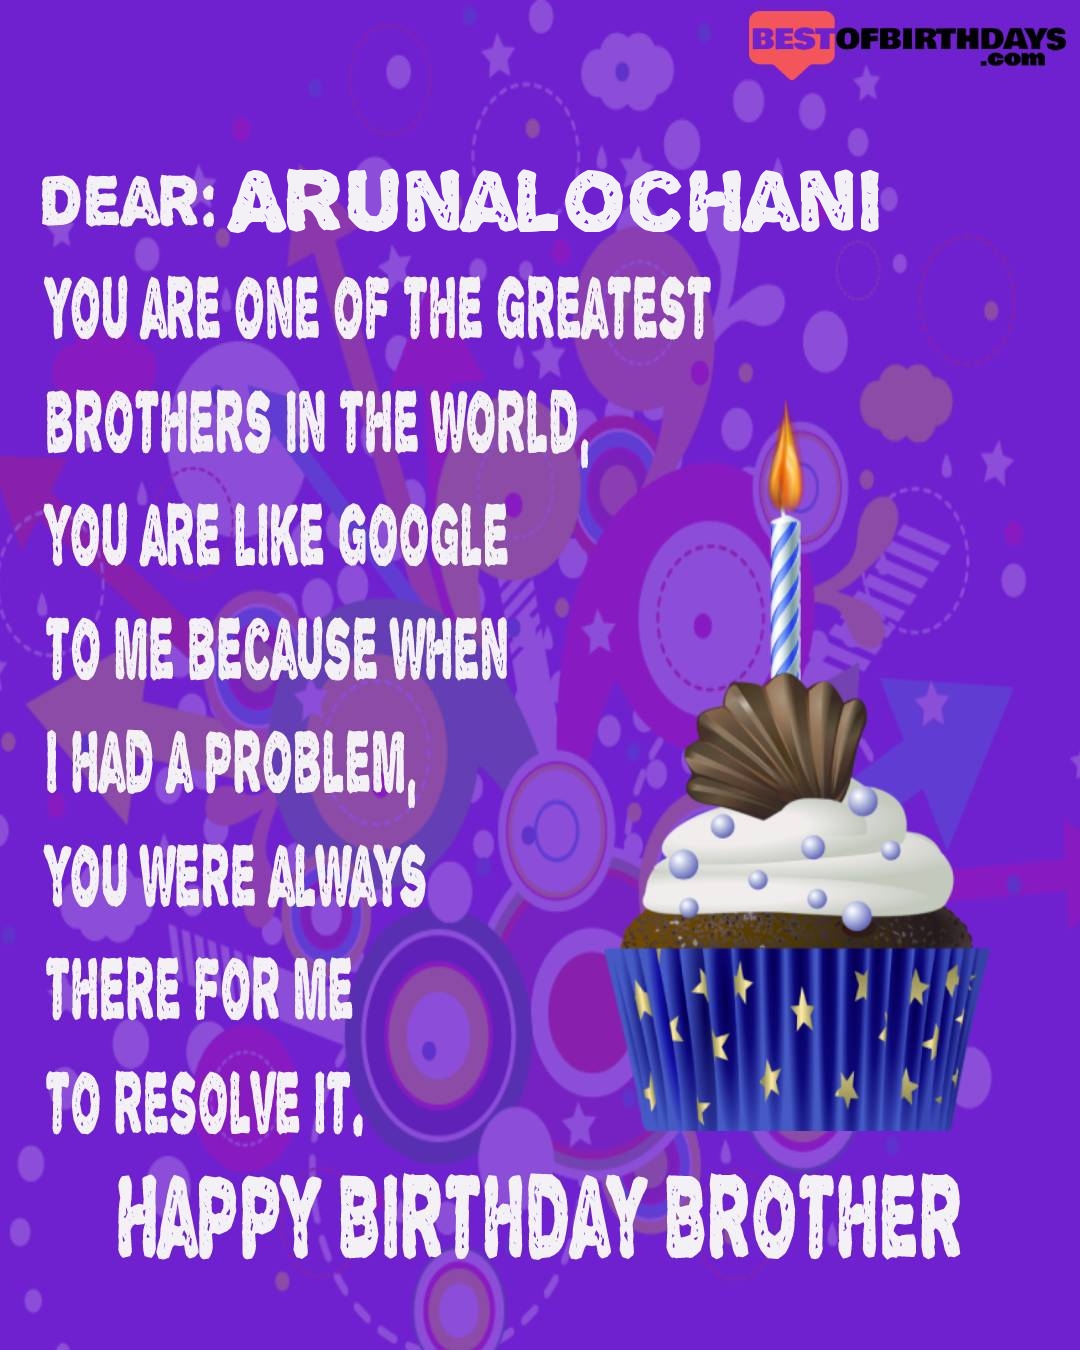 Happy birthday arunalochani bhai brother bro